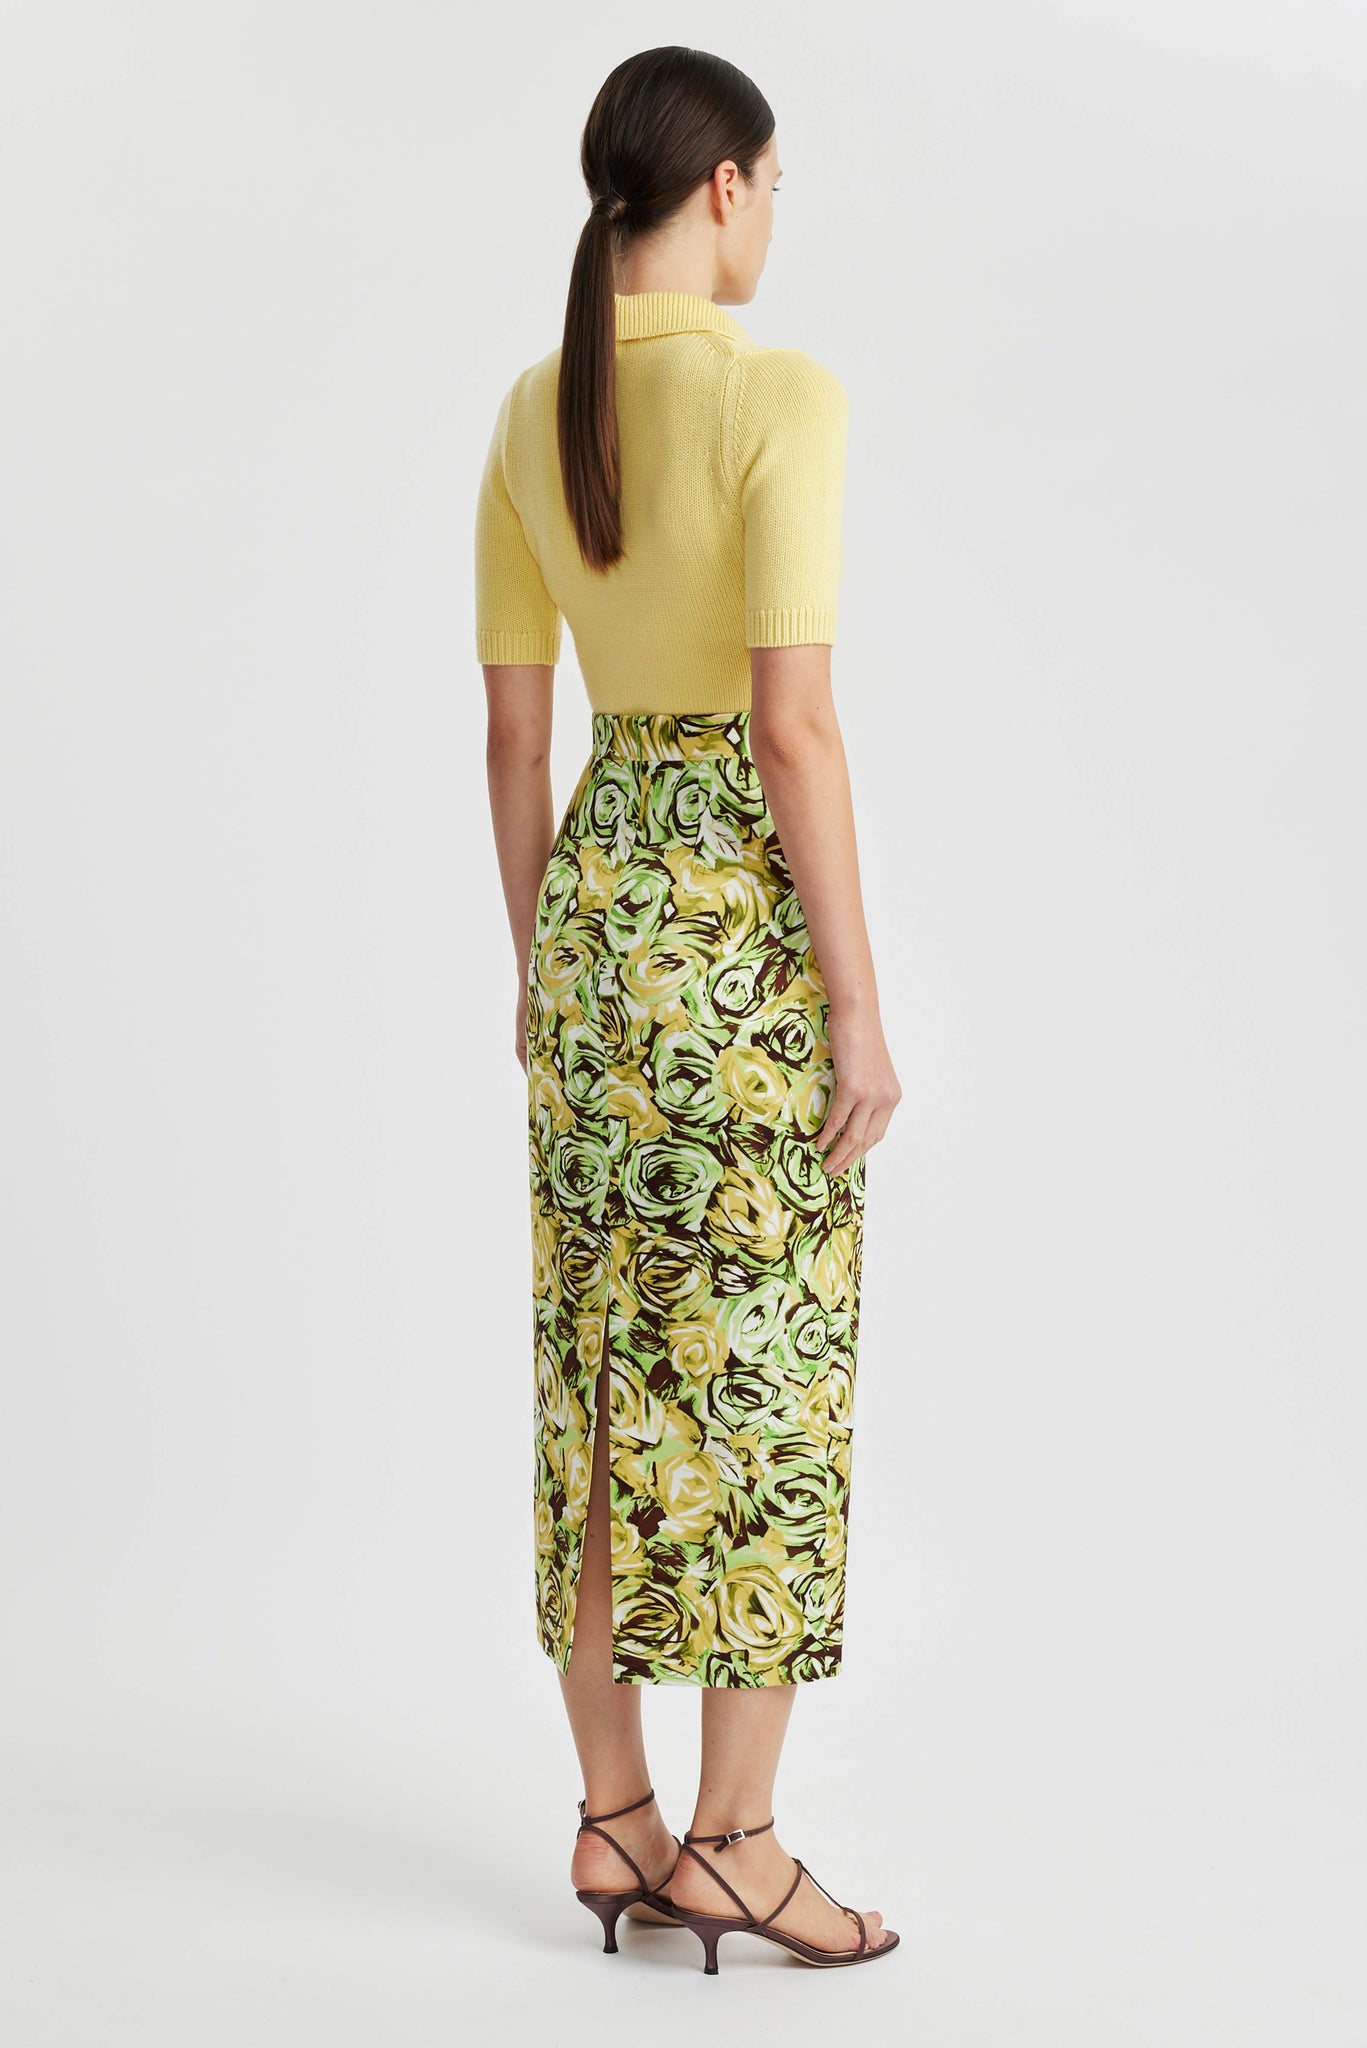 Lorelei Skirt In Abstract Roses Green & Lemon Twill | Emilia Wickstead